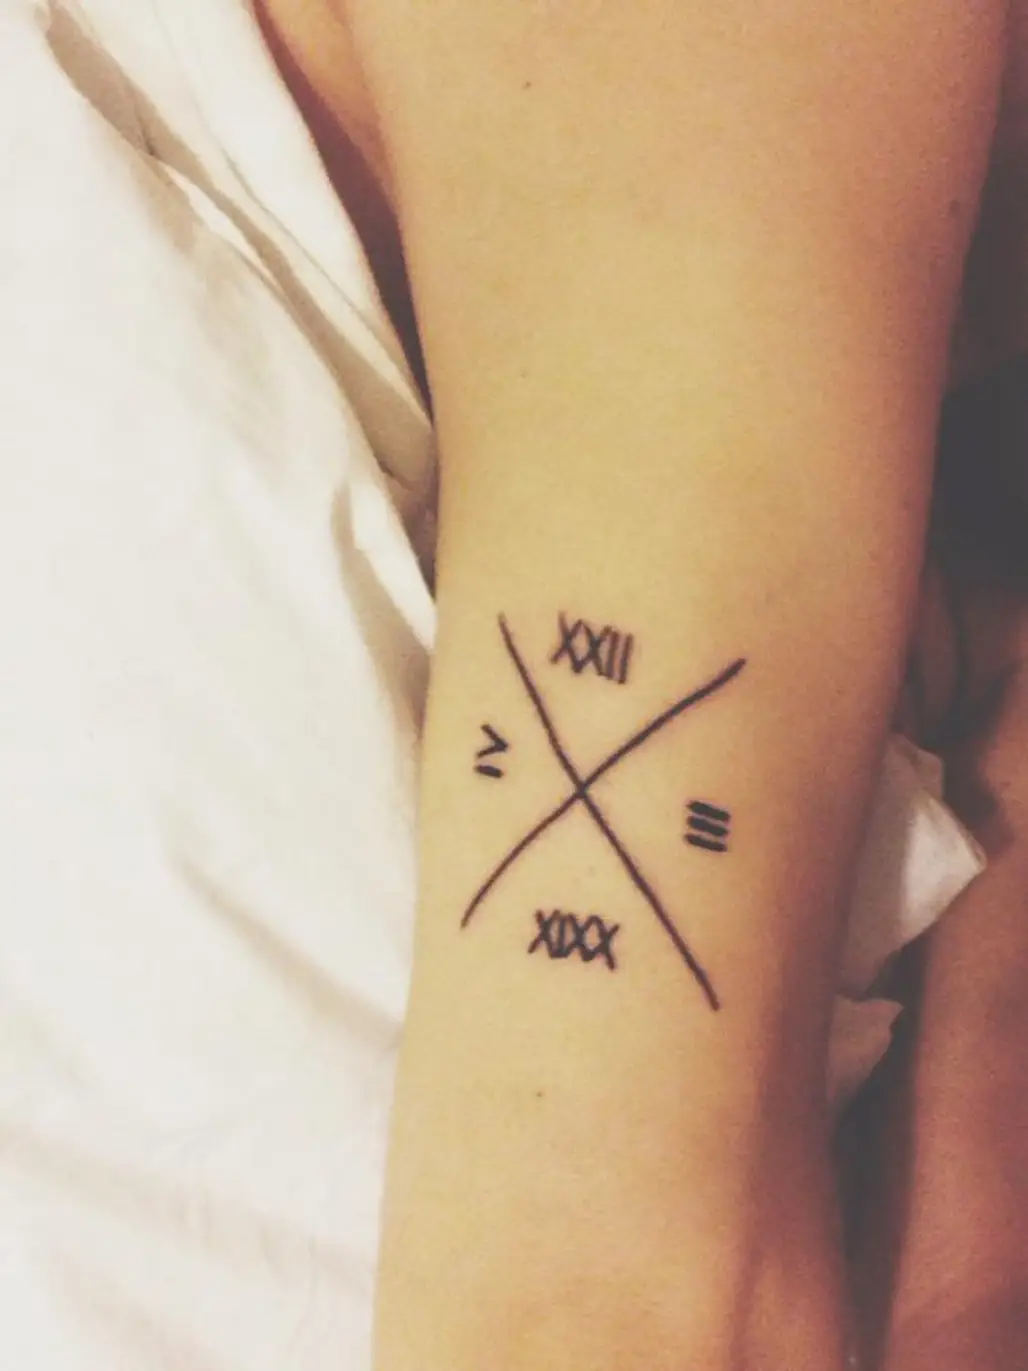 tattoo,arm,skin,leg,hand,